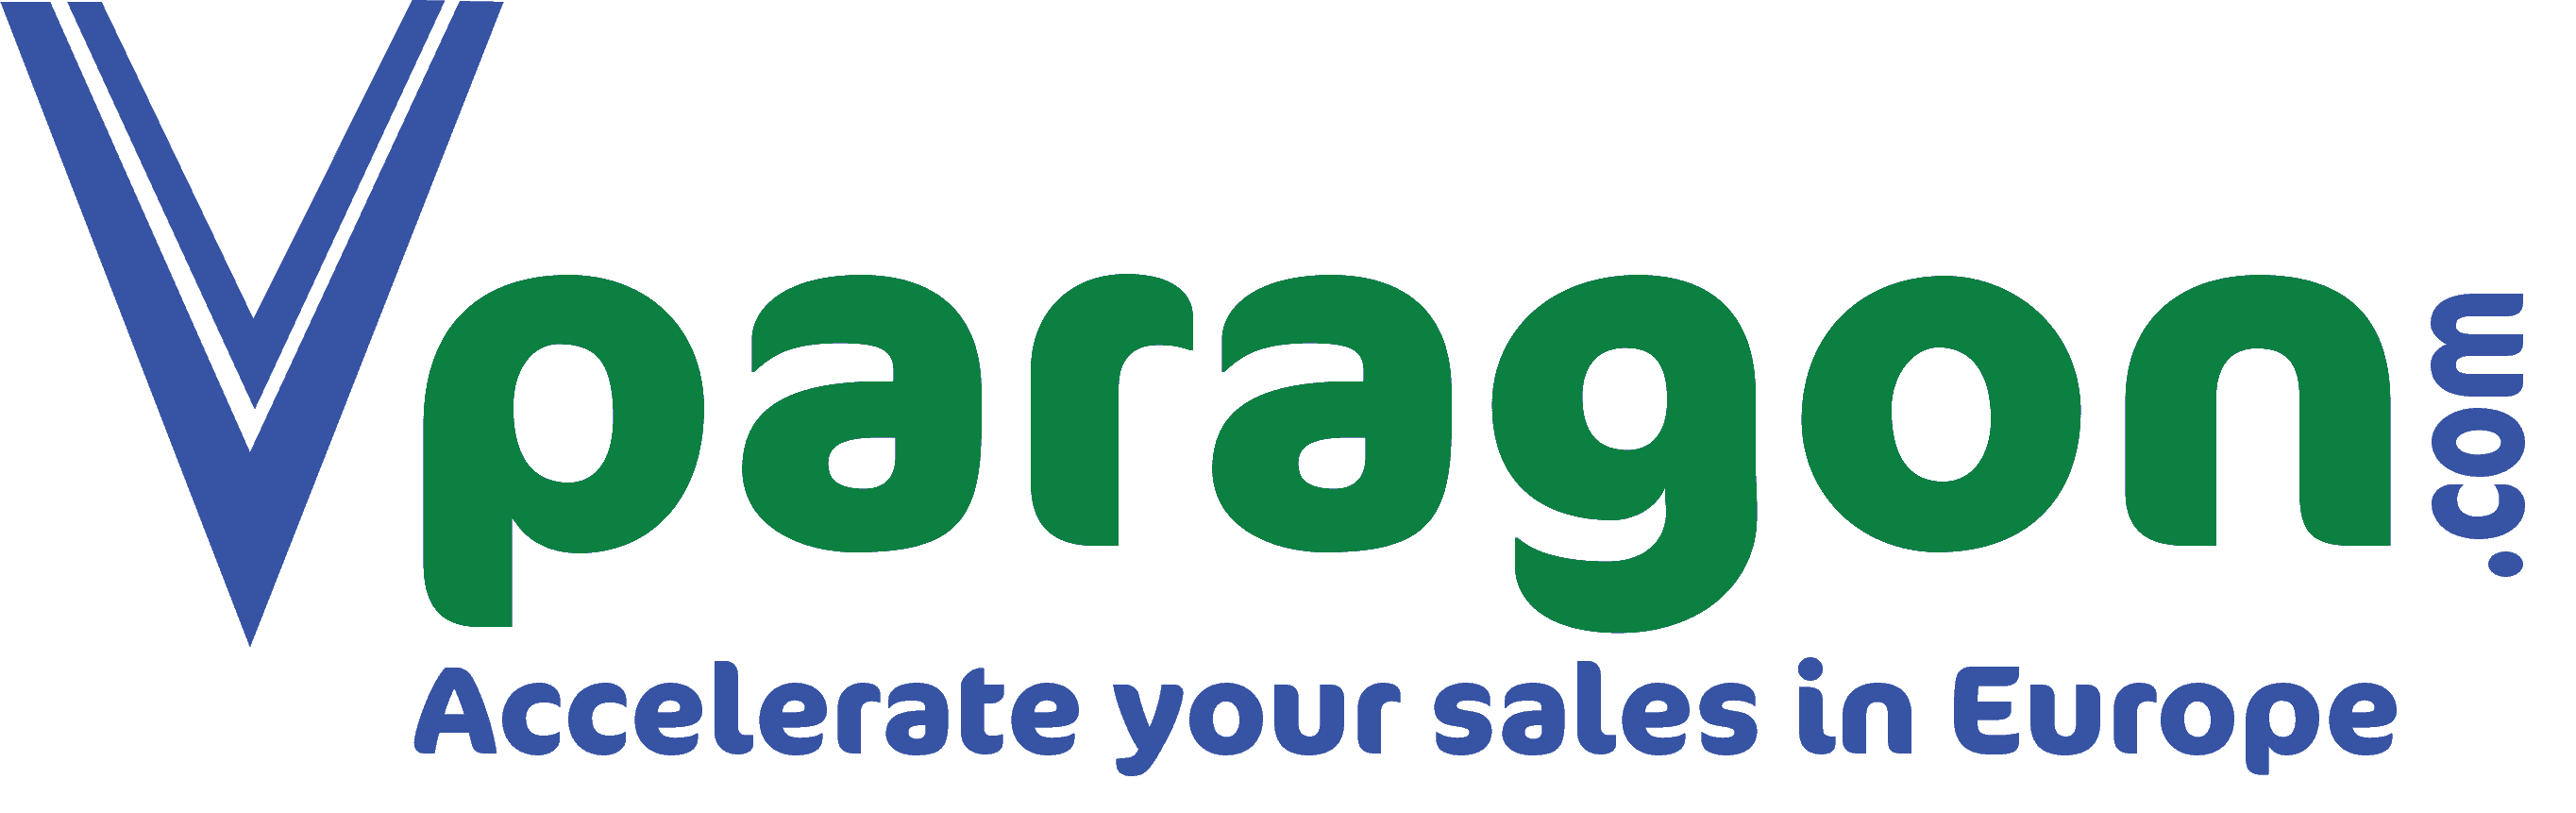 VPARAGON Sales Outsourcing